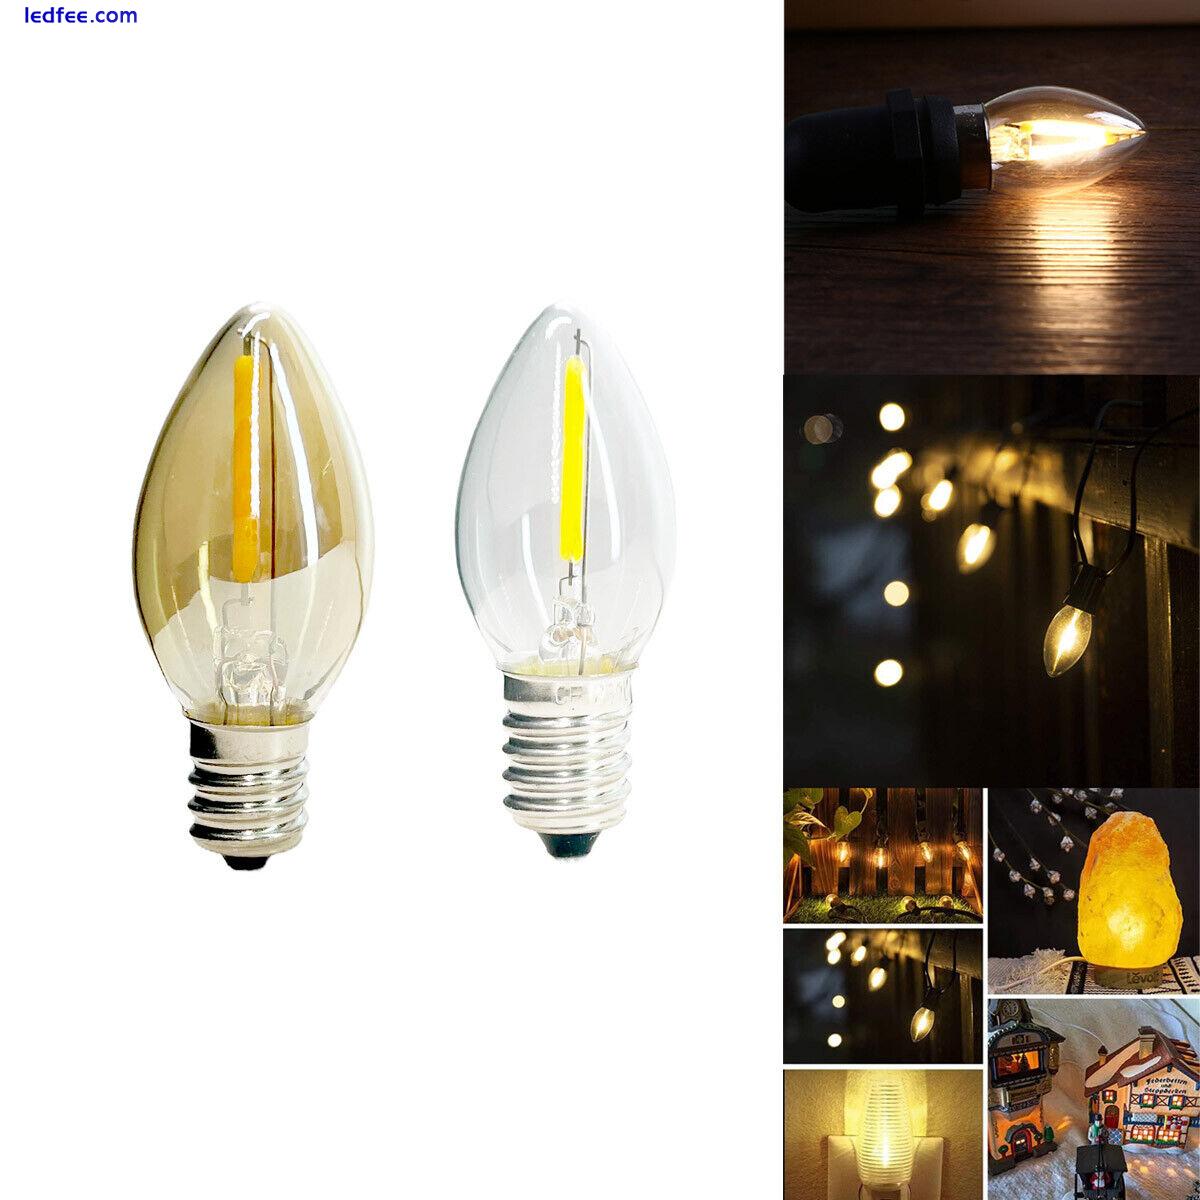 LED Filament Candle Light Bulb C7 1W Screw E14 Vintage Lamp Warm White AC 220V 3 